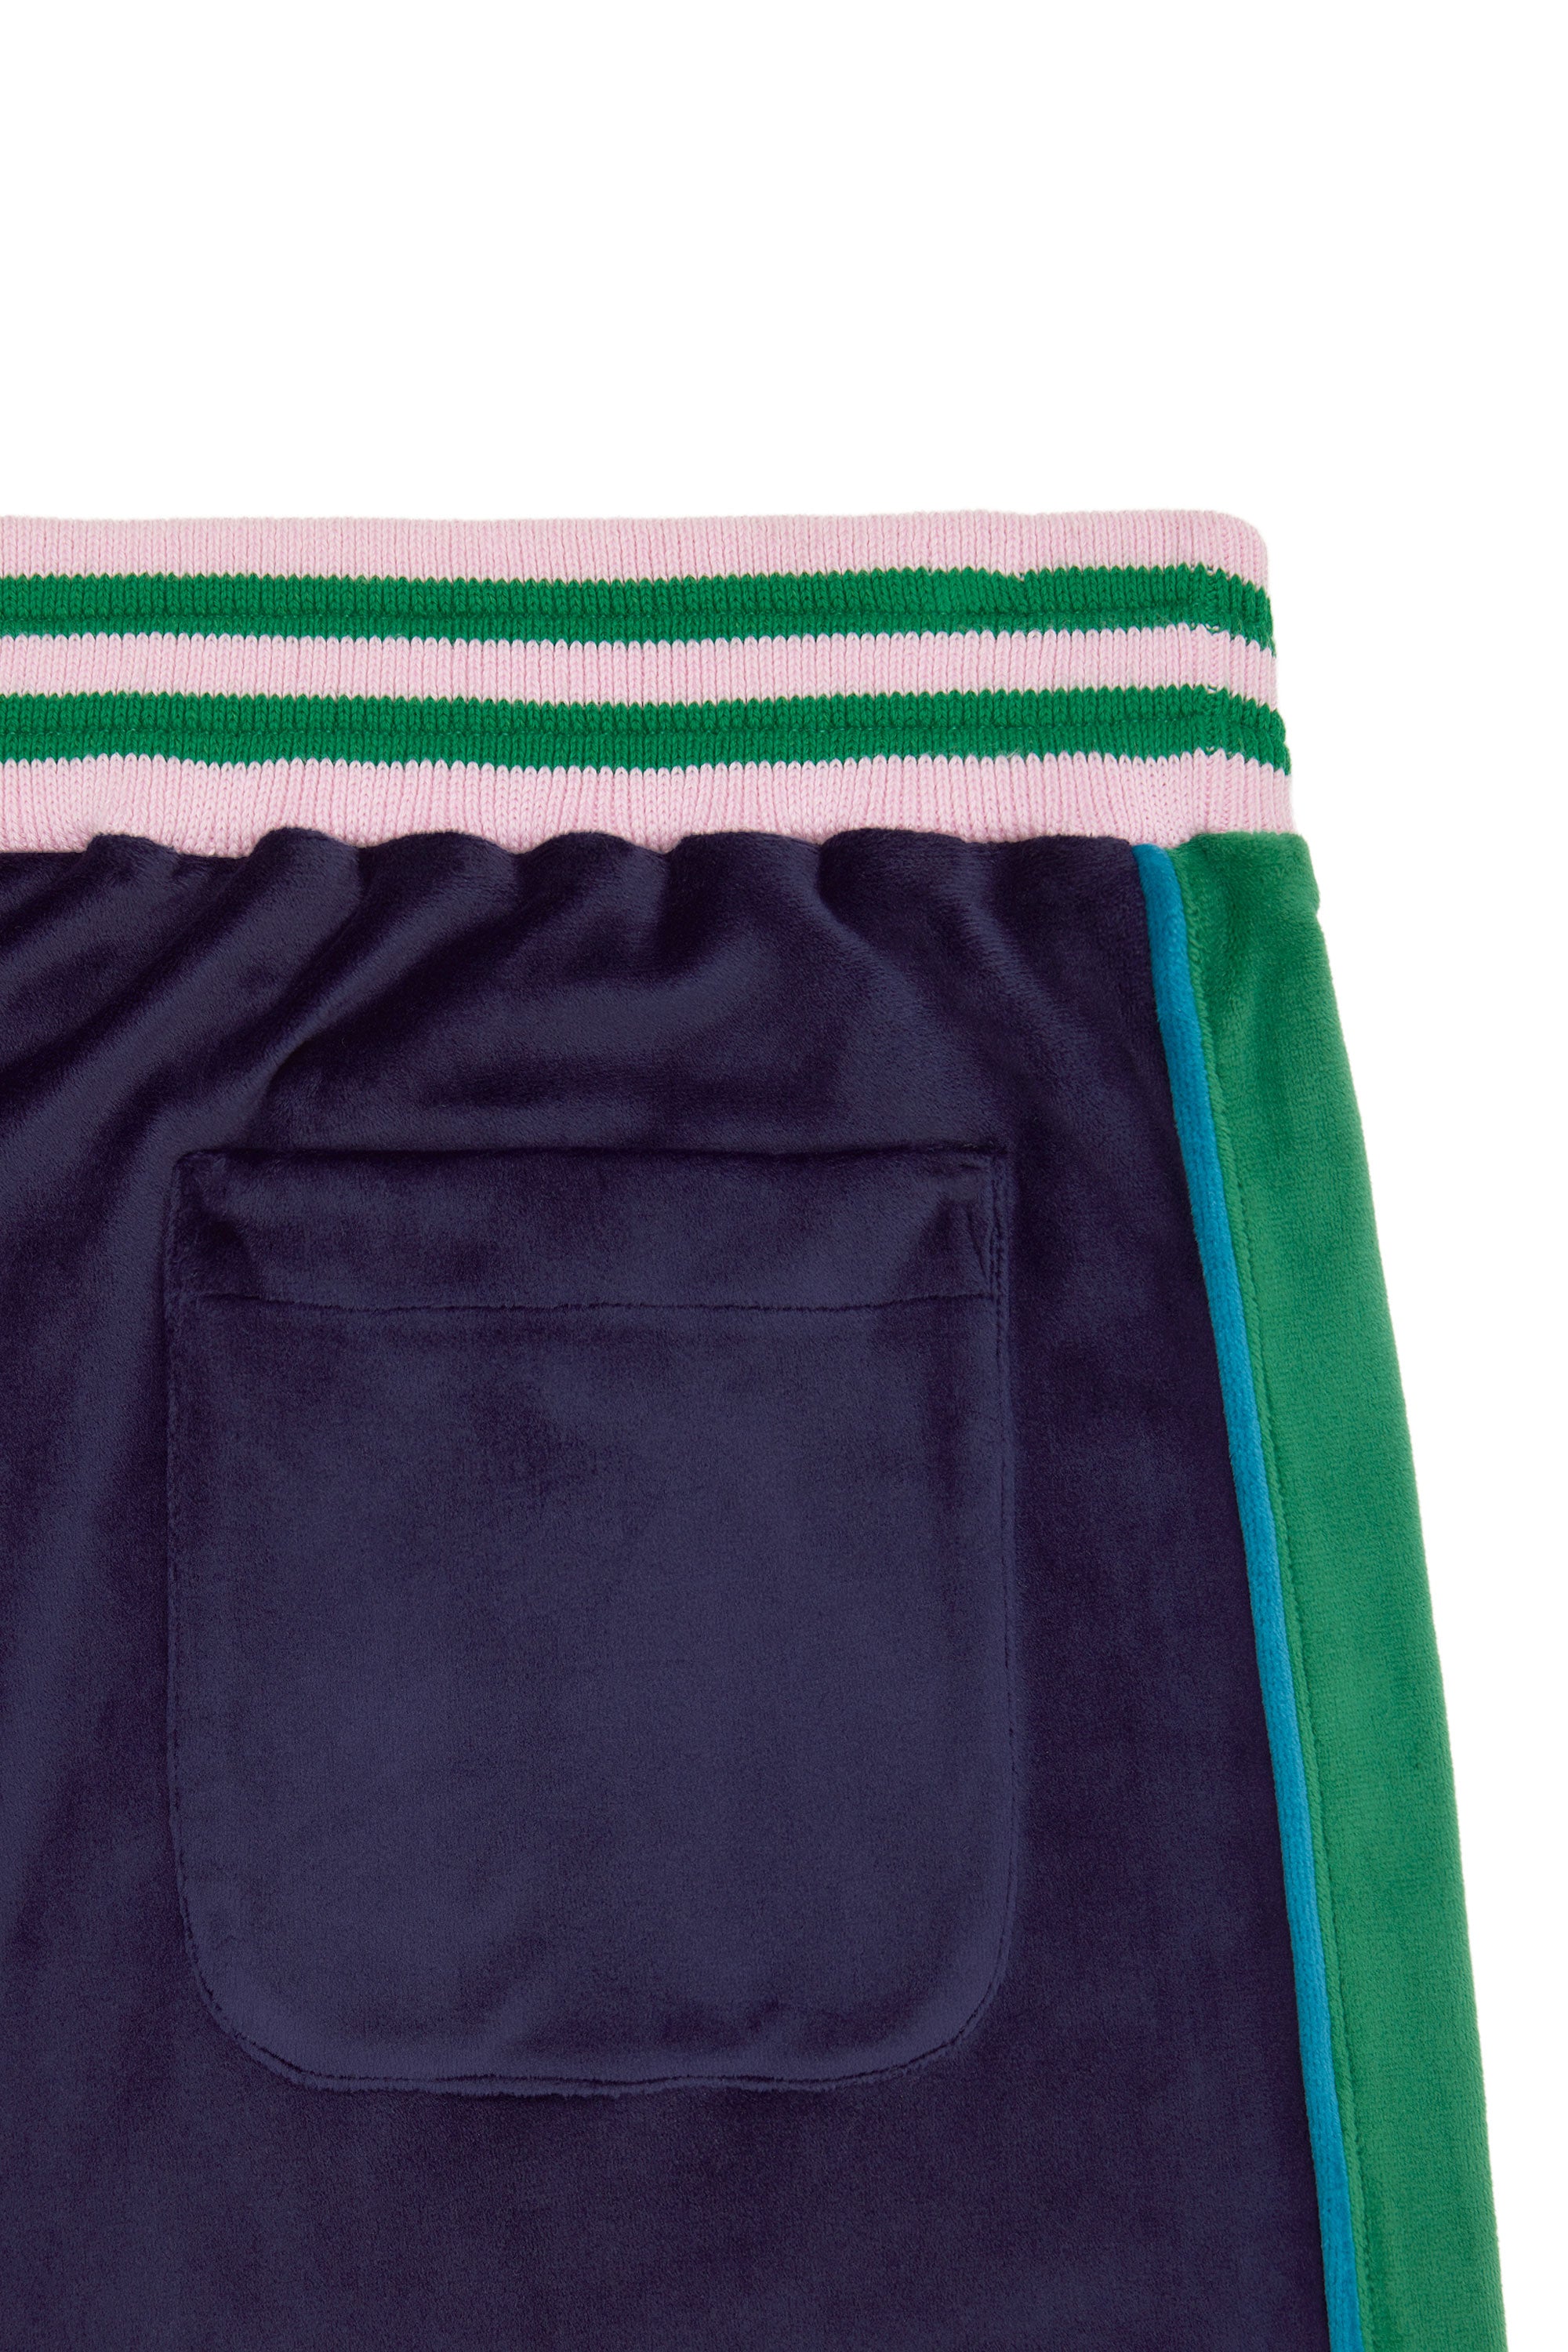 Vimse Blue/Teddy Training Pants, 2-Pack - Ecco Verde Online Shop